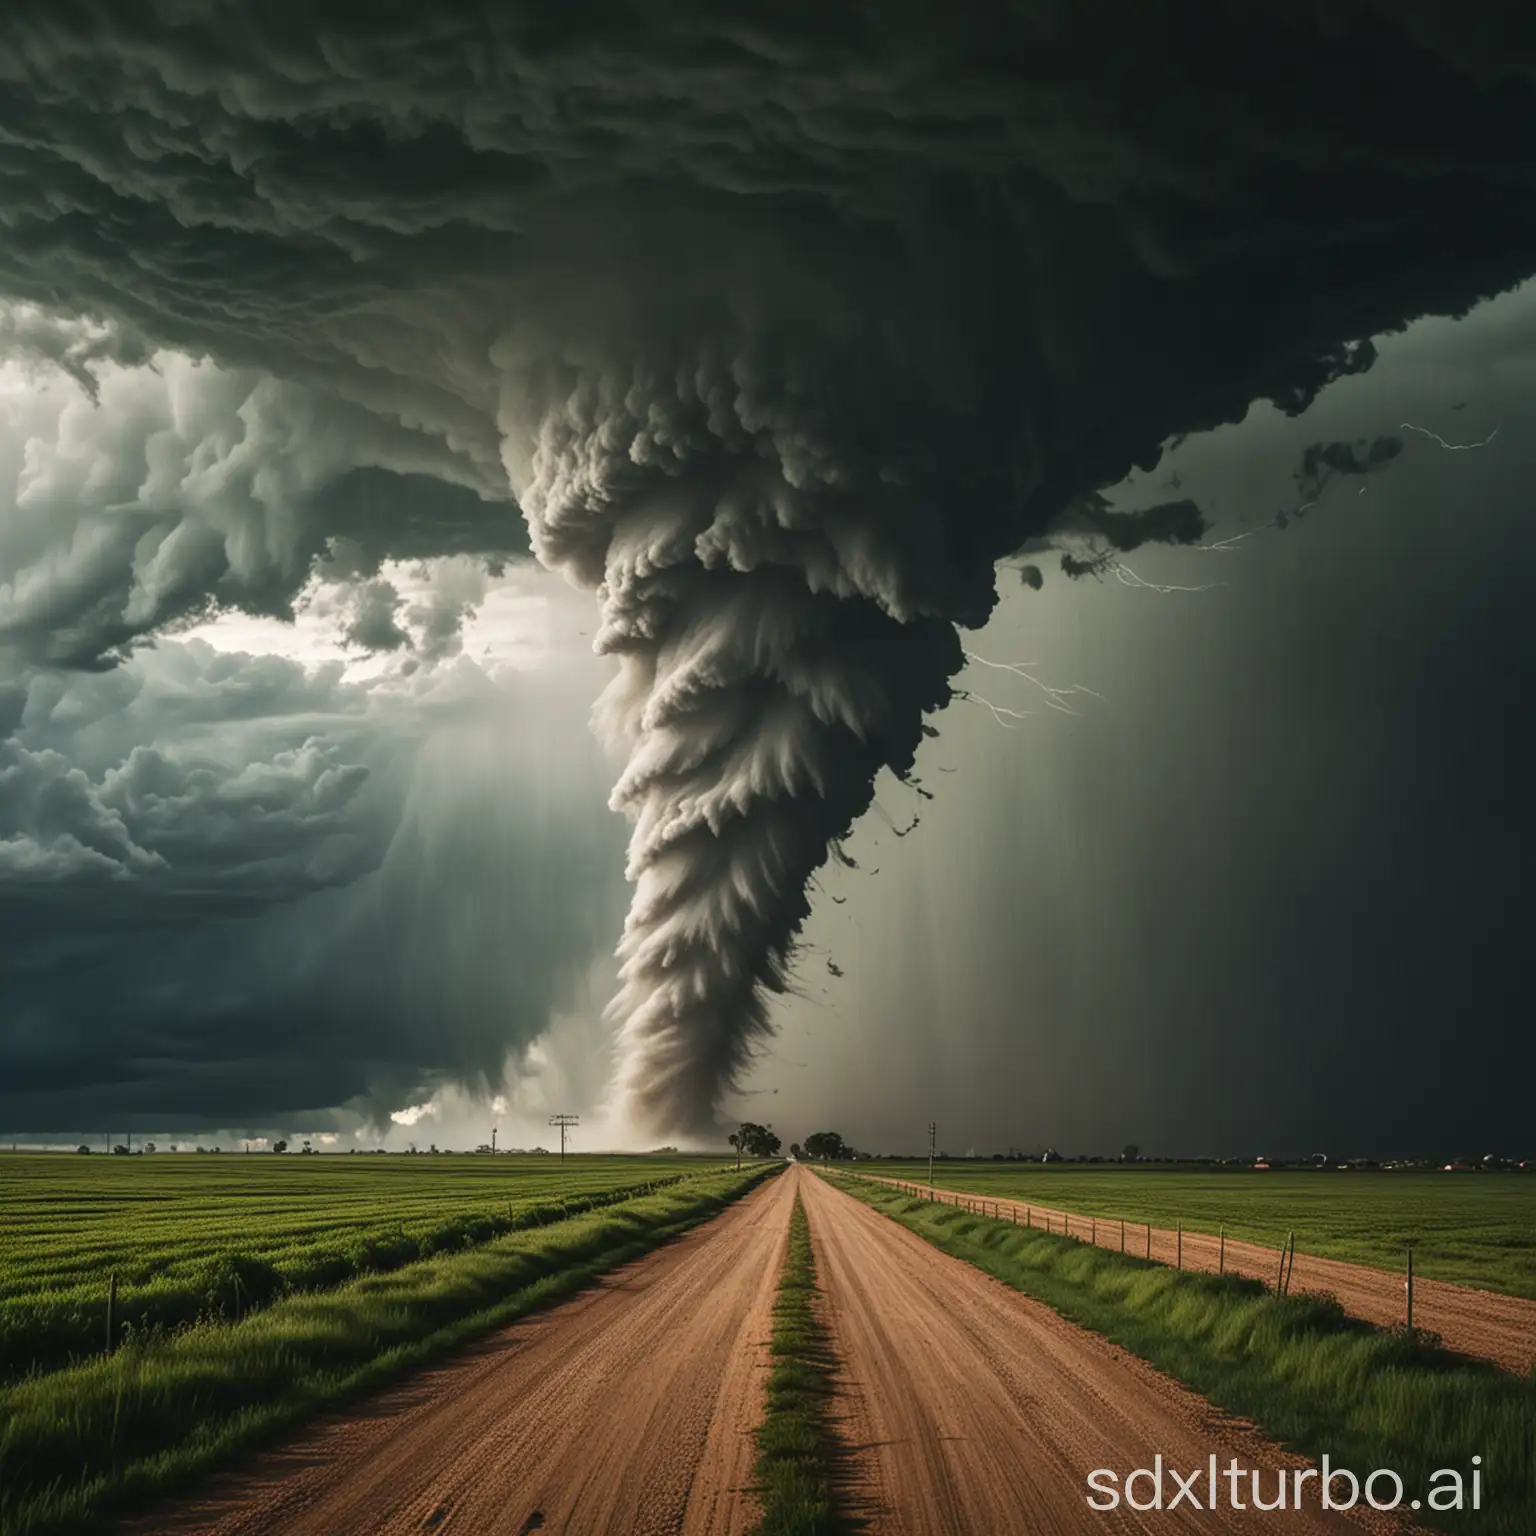 Dramatic-Tornado-Ravaging-Countryside-Landscape